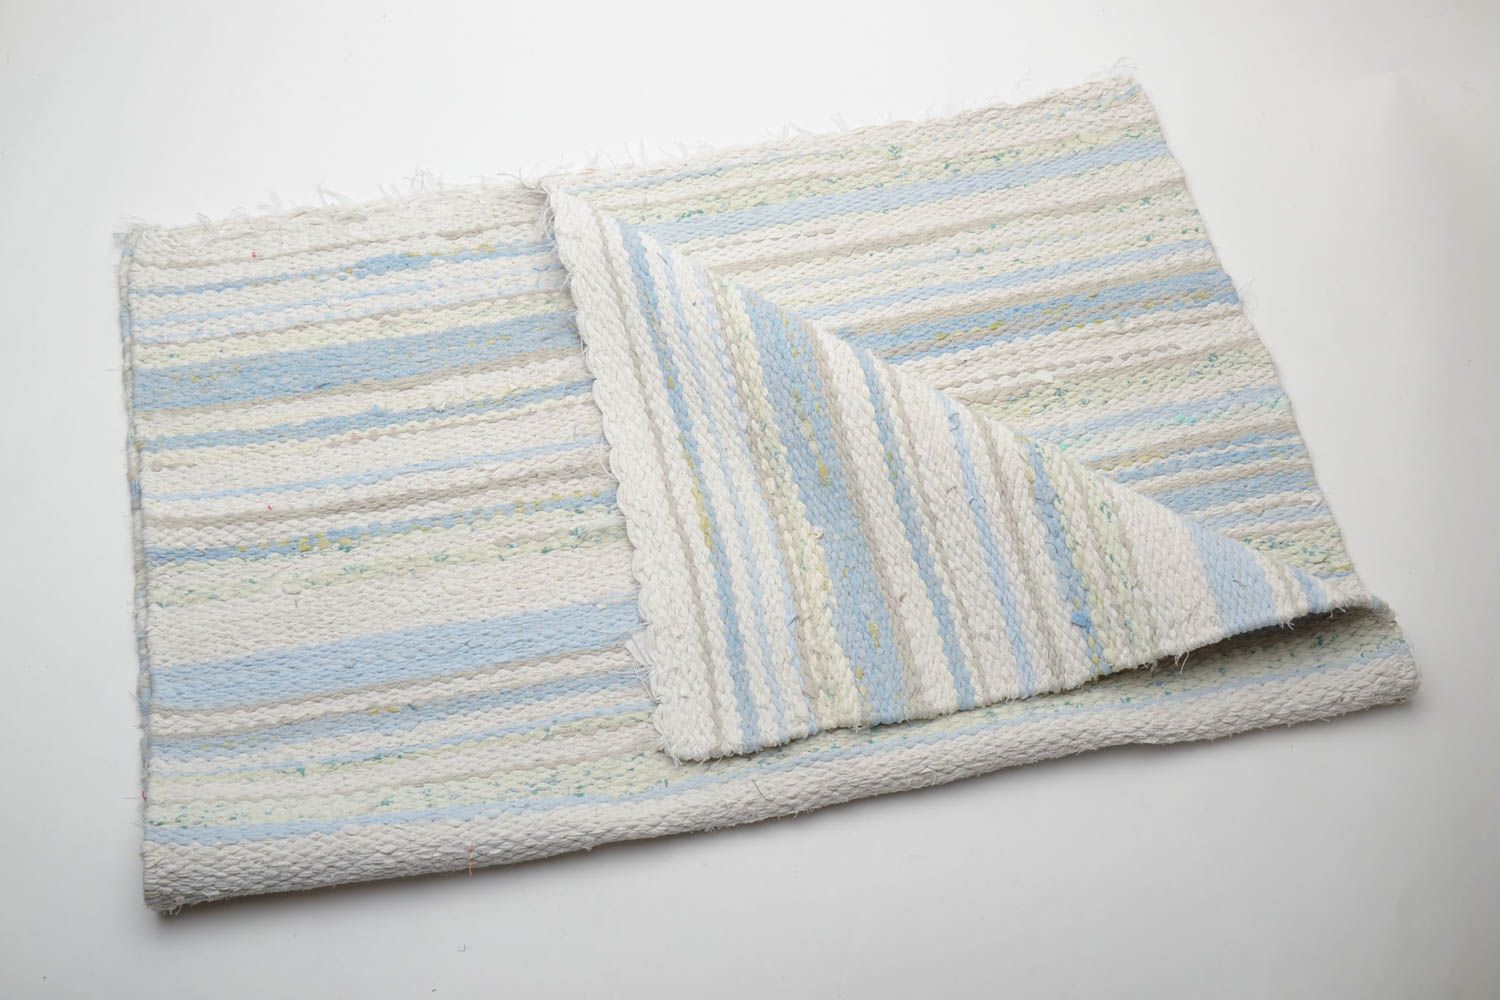 Hand woven rug made of natural materials photo 2